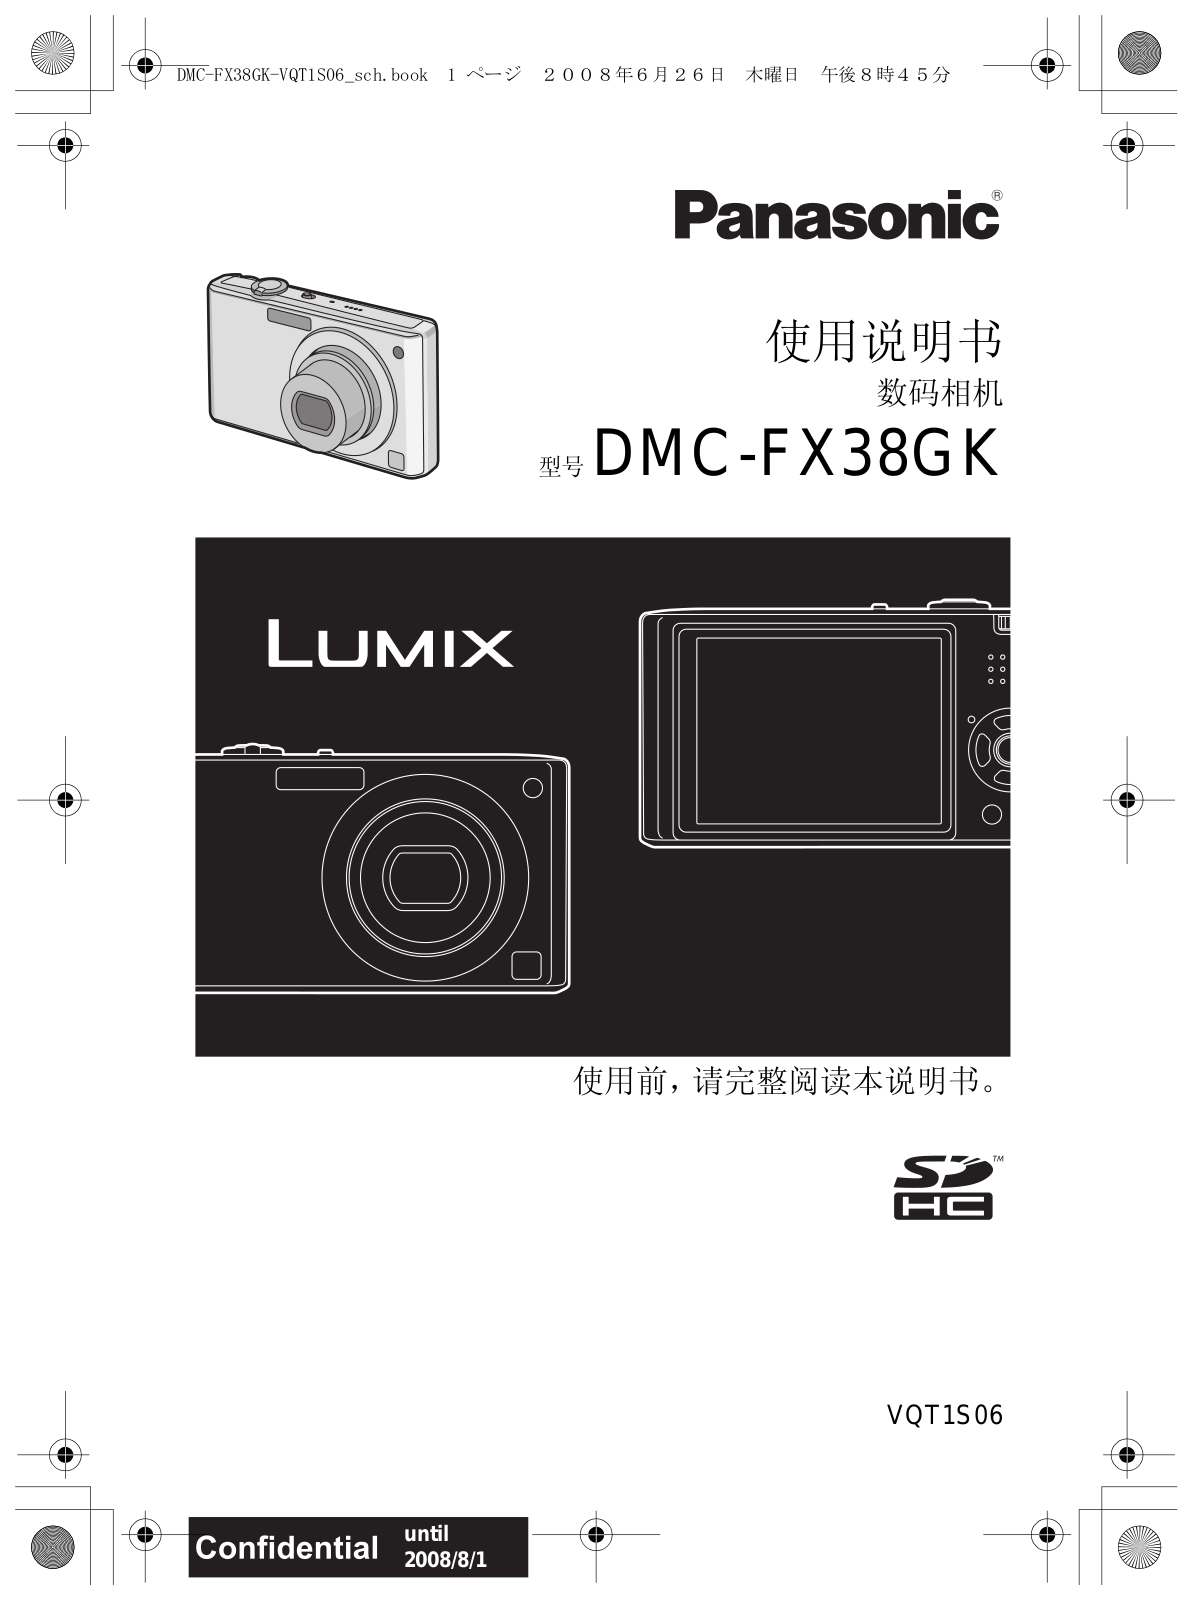 Panasonic DMC-FX38GK User Manual